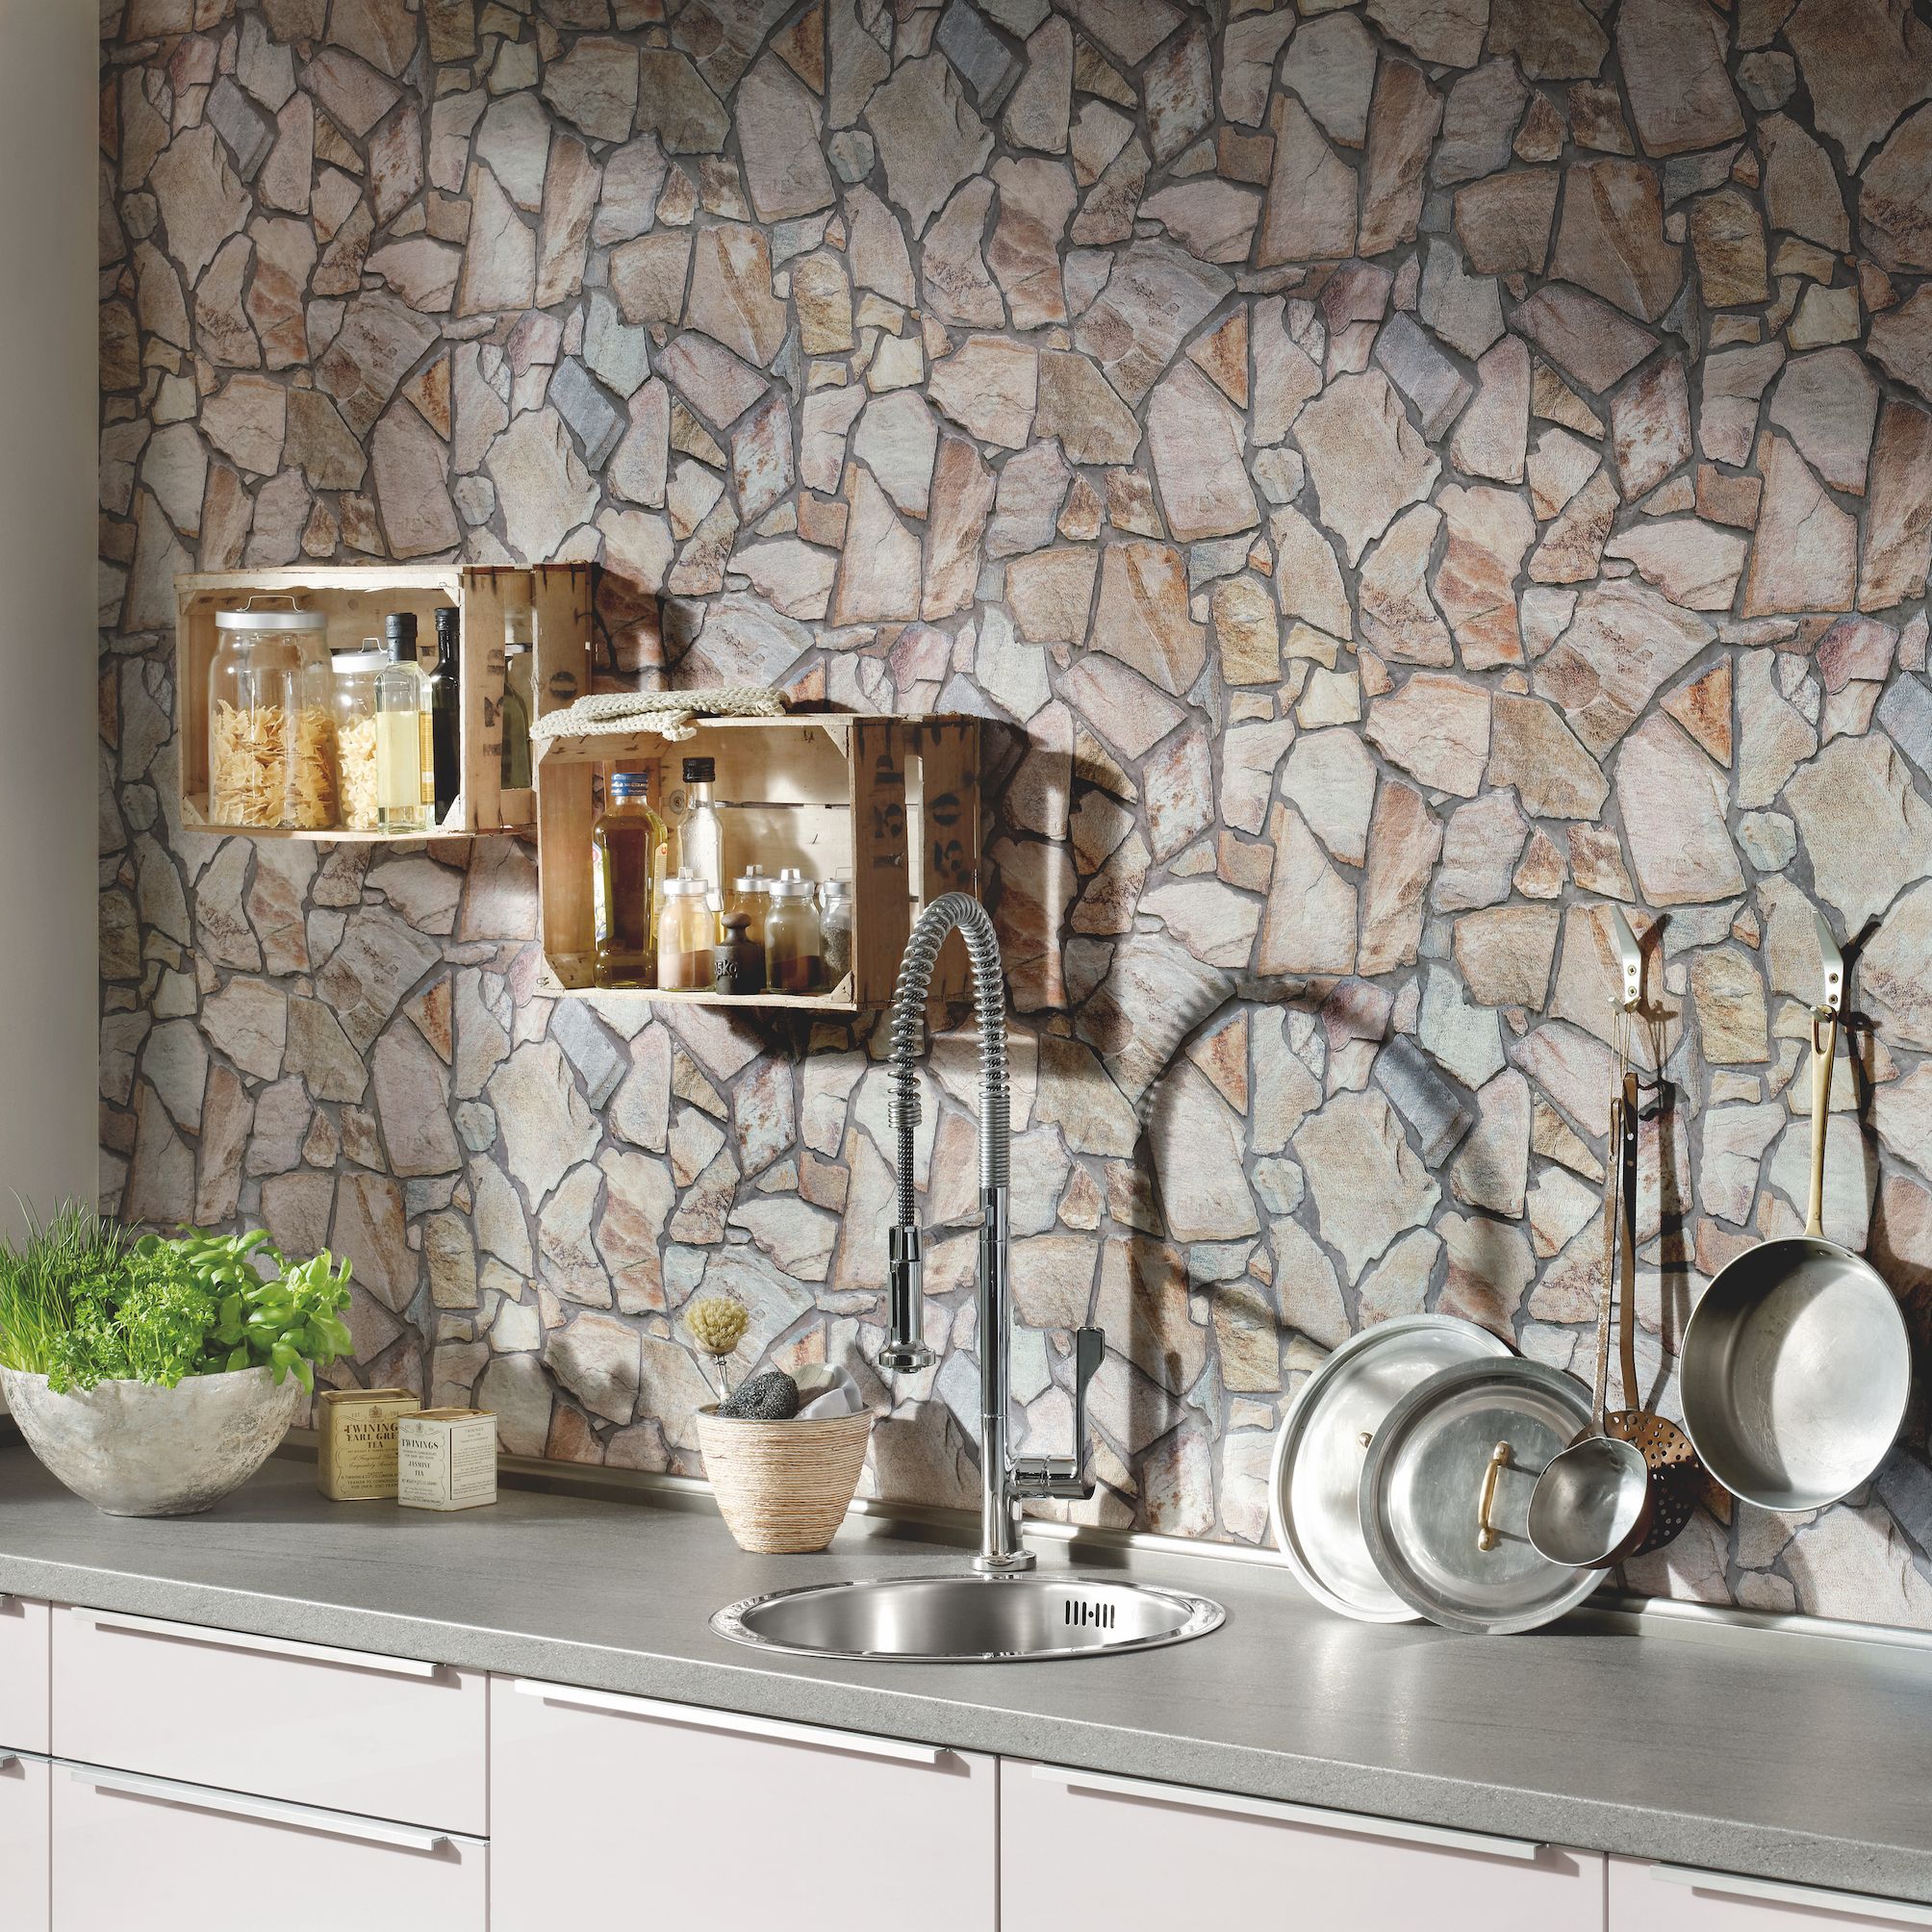 New Home Interior Design: Kitchen wallpaper ideas